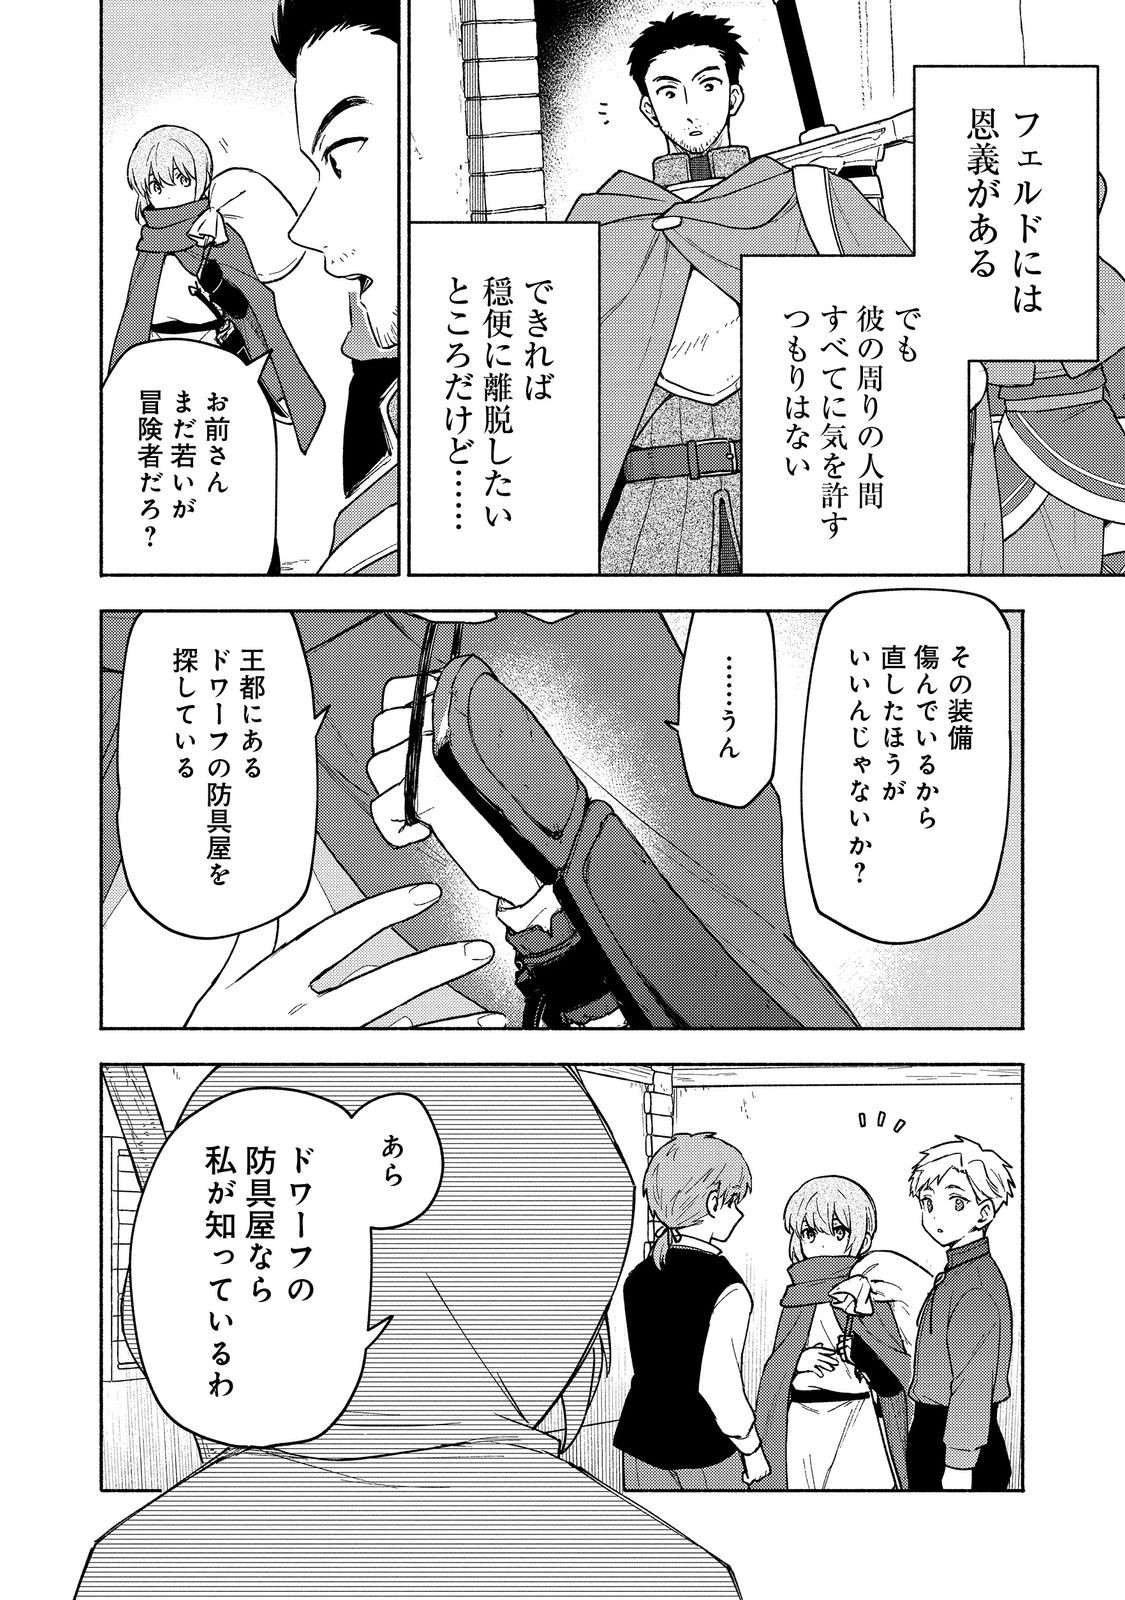 Otome Game no Heroine de Saikyou Survival - Chapter 22 - Page 8